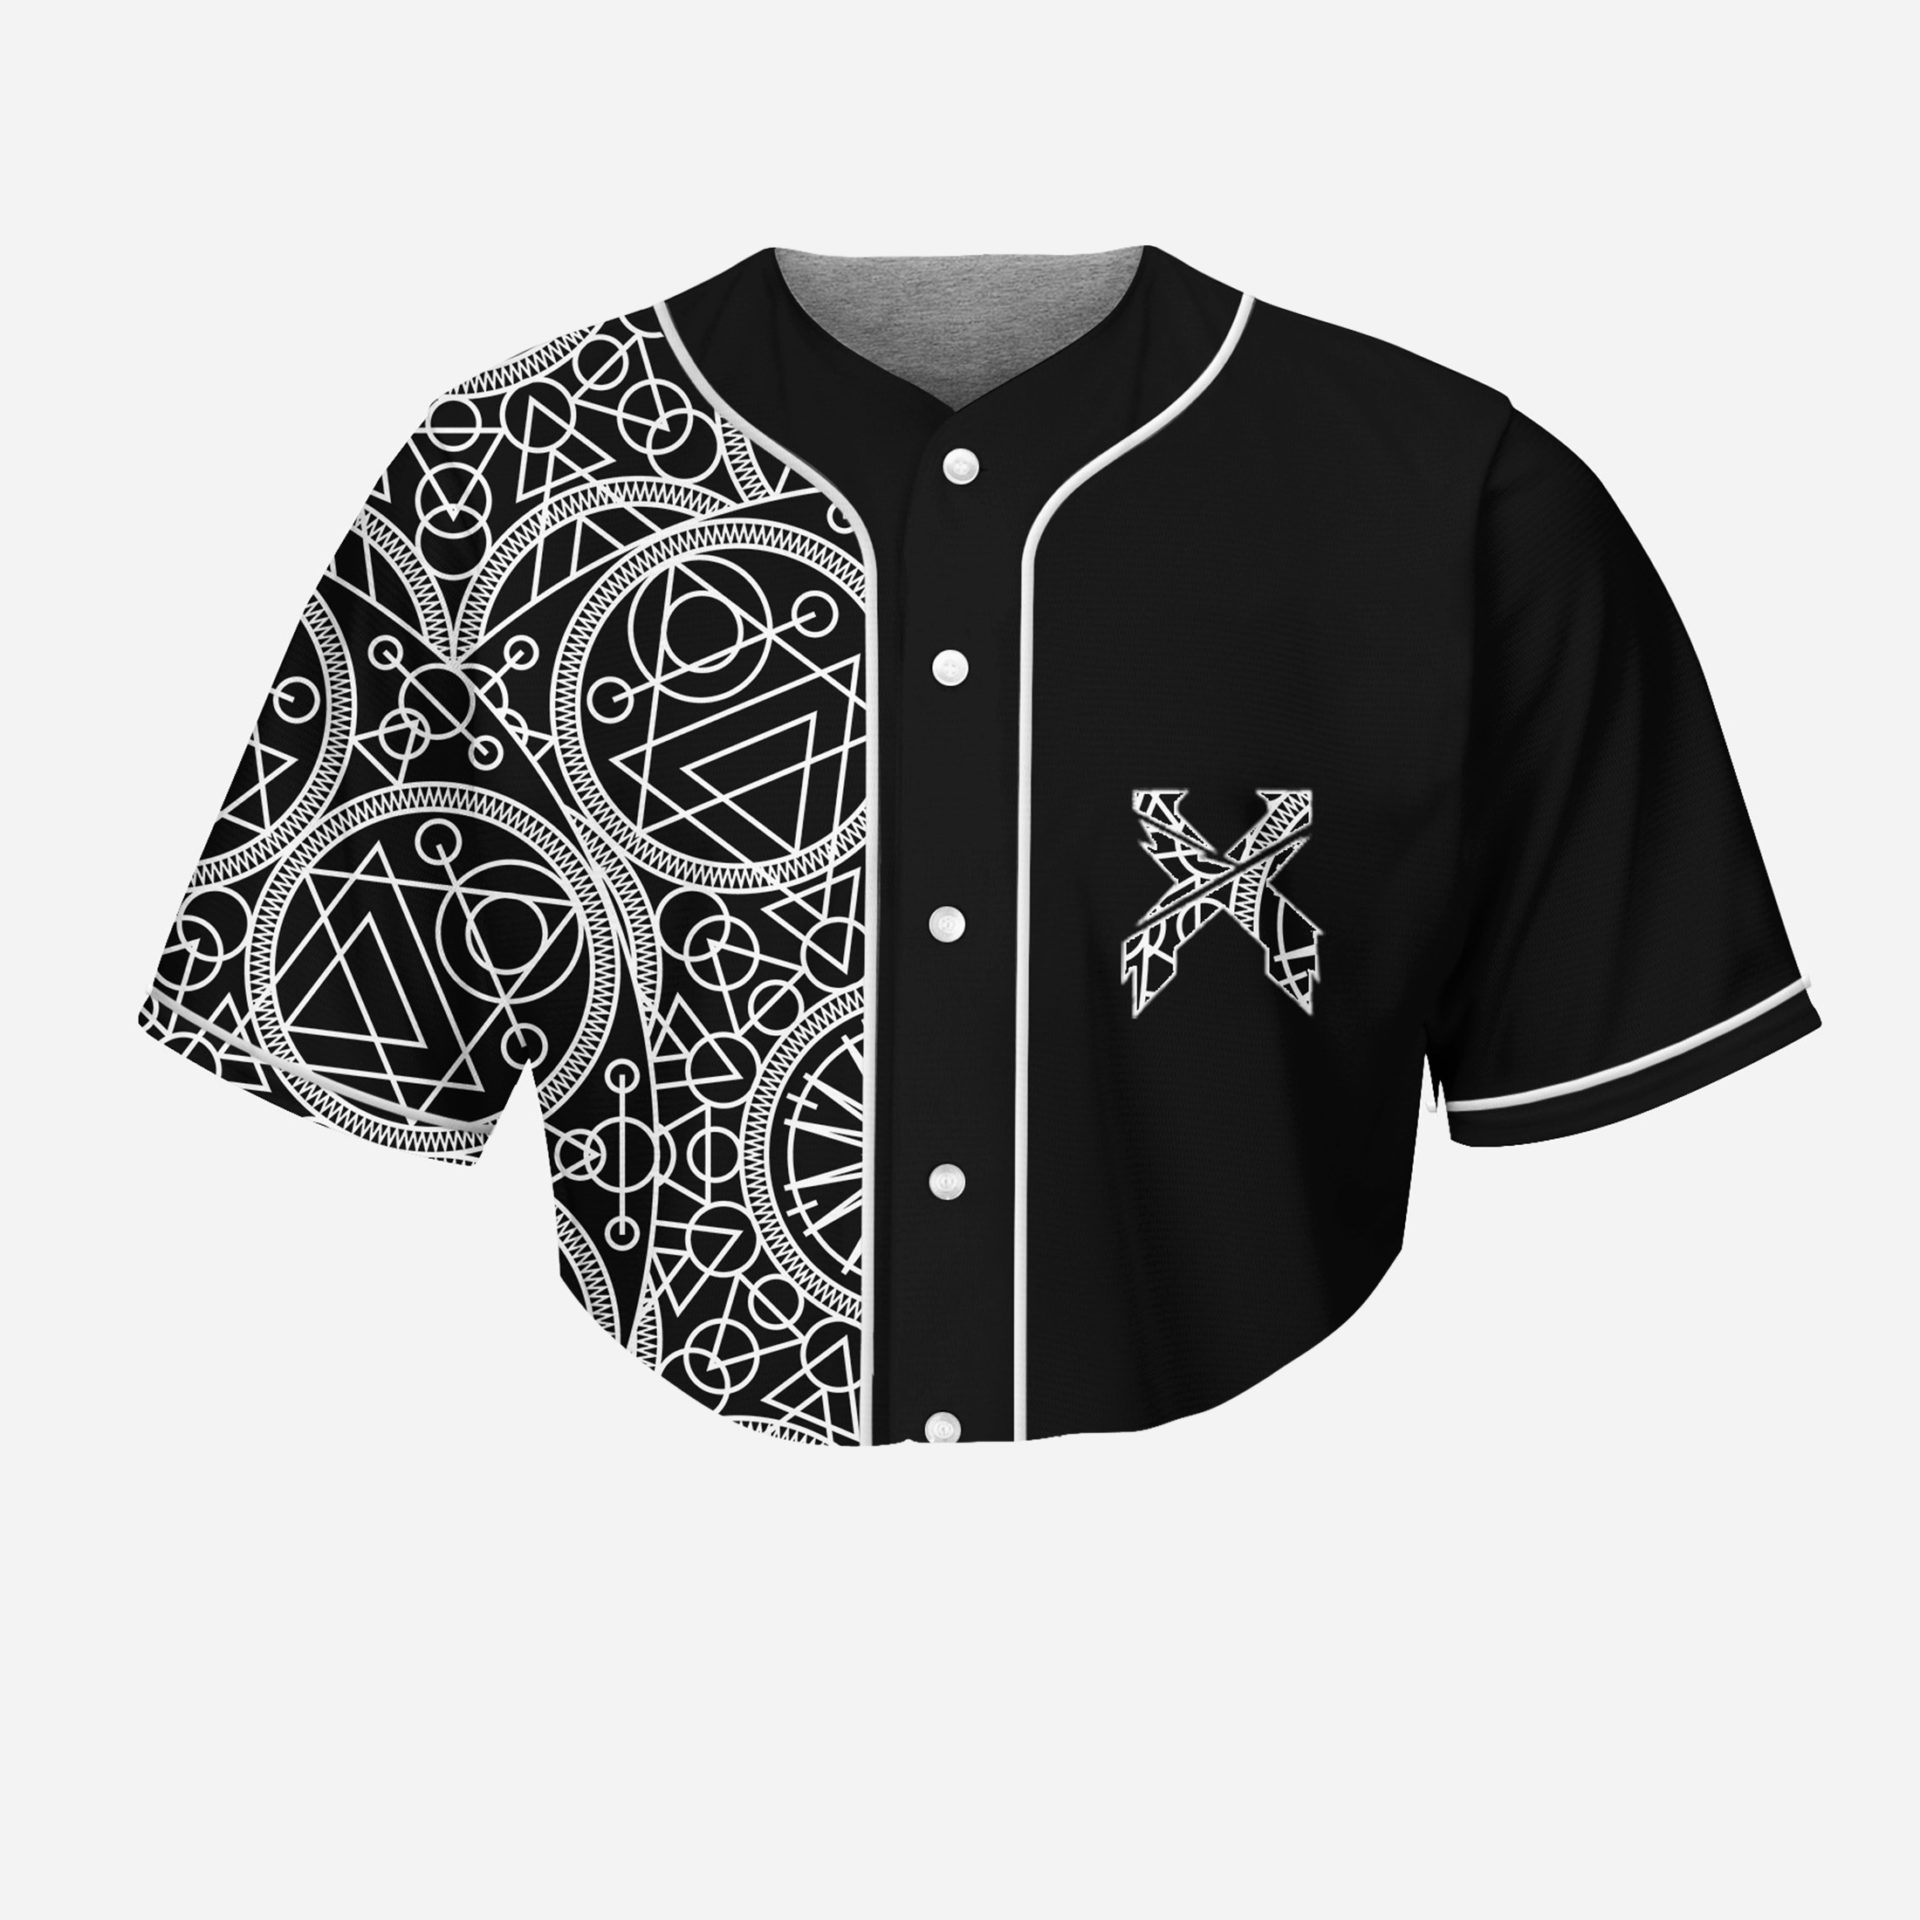 Excision geometric split crop top baseball jersey for EDM festivals